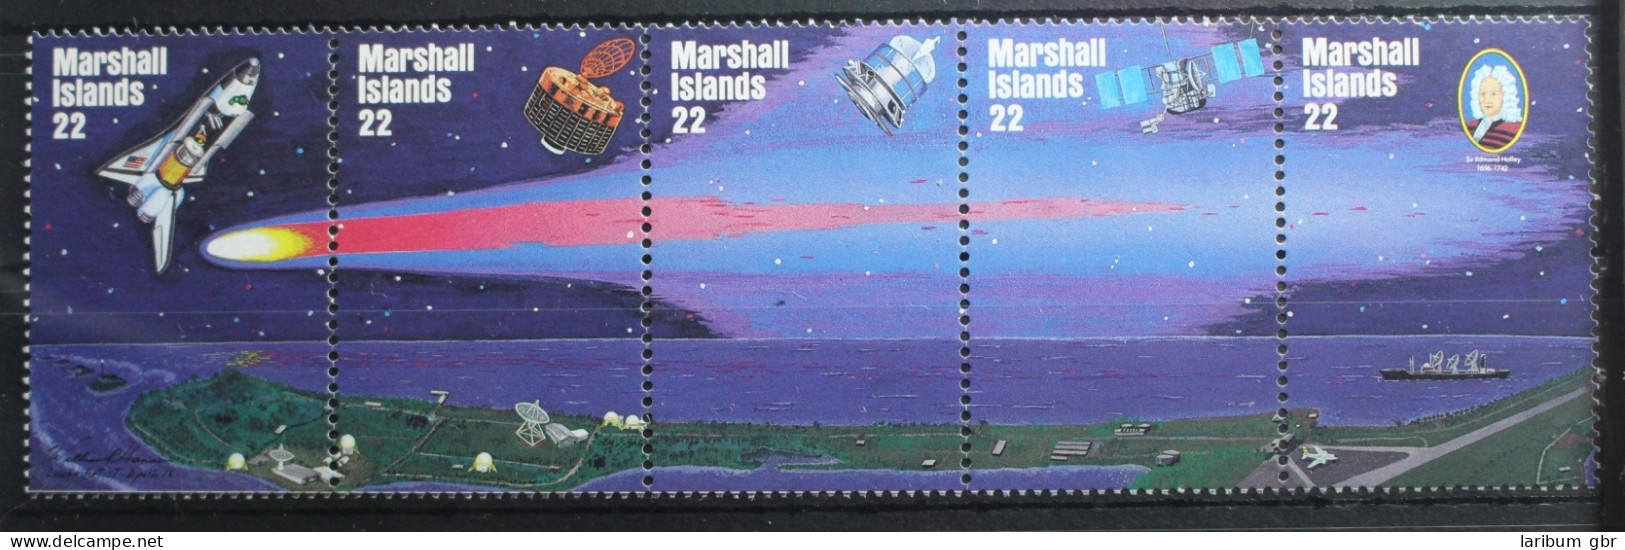 Marshall-Inseln 62-66 Postfrisch #SH493 - Marshall Islands